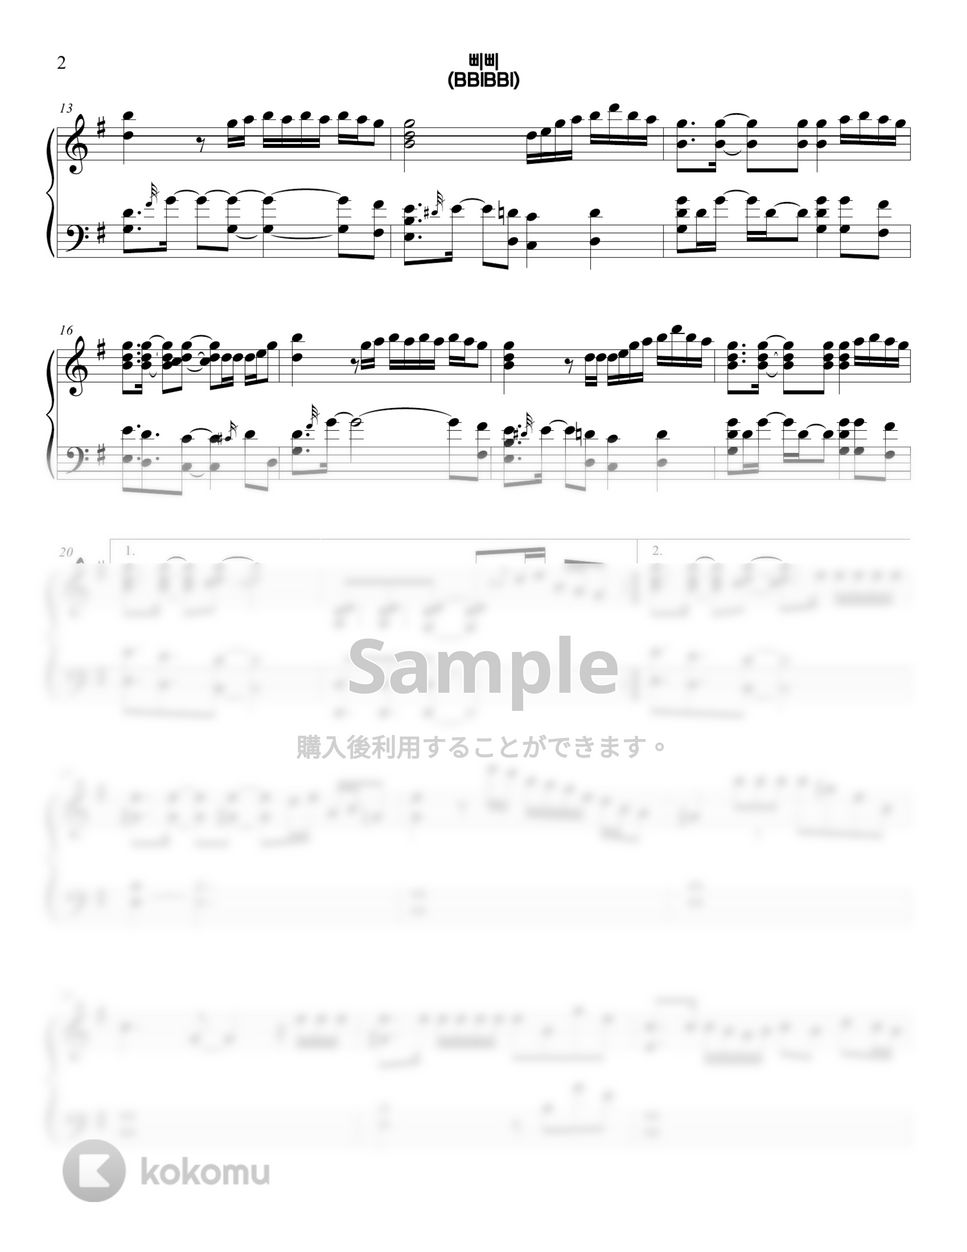 IU - BBIBBI (삐삐) by Sunny Fingers Piano